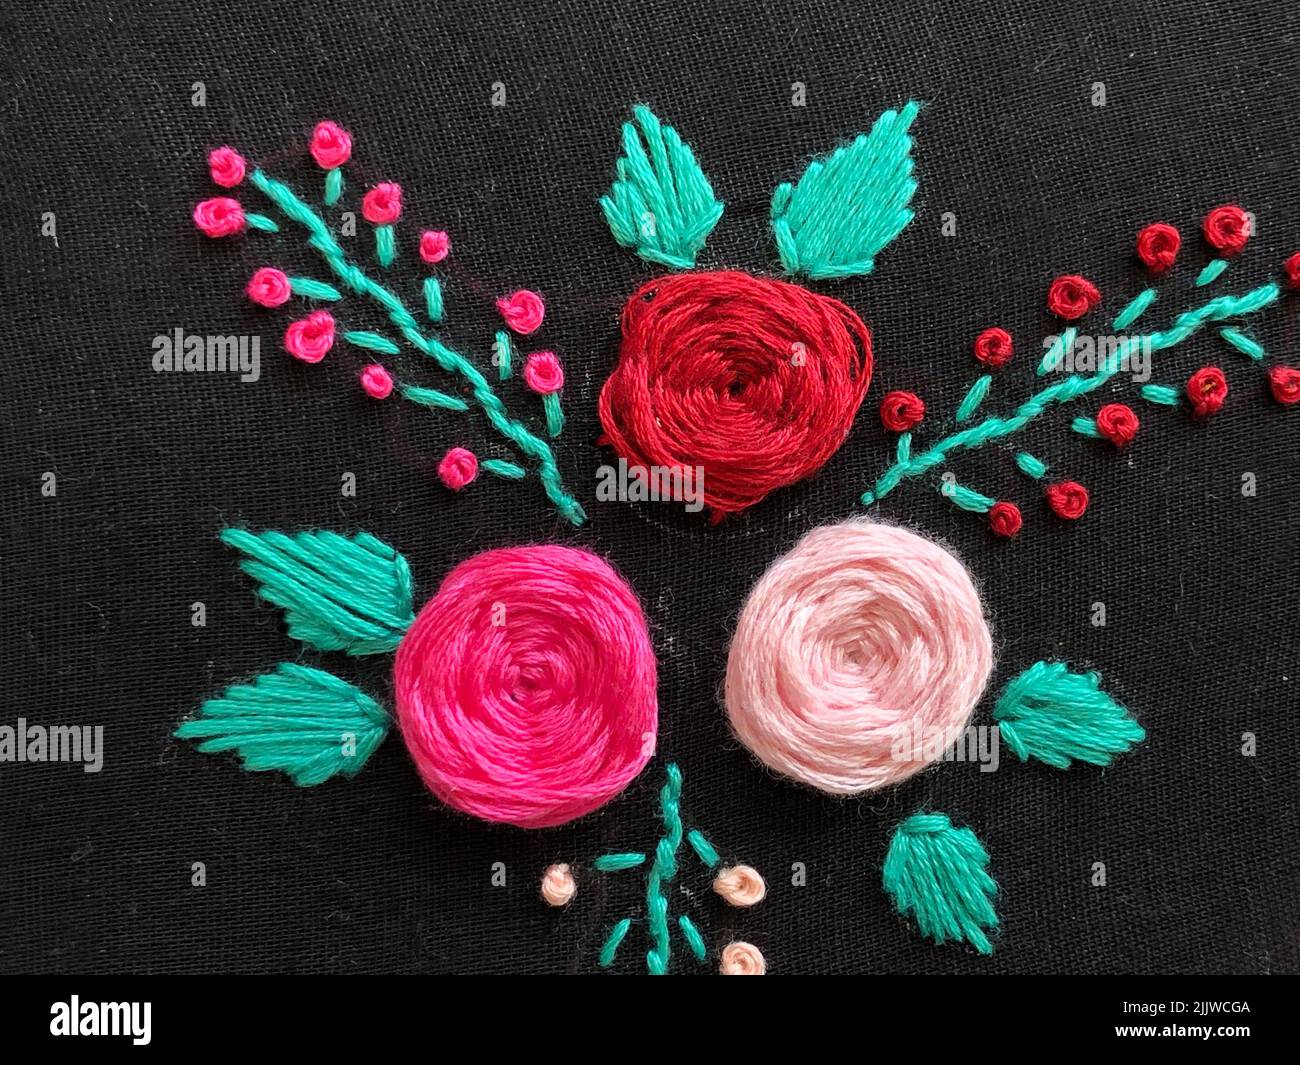 Hand embroidery rose flower stitch (wagon wheel stitch) Stock Photo